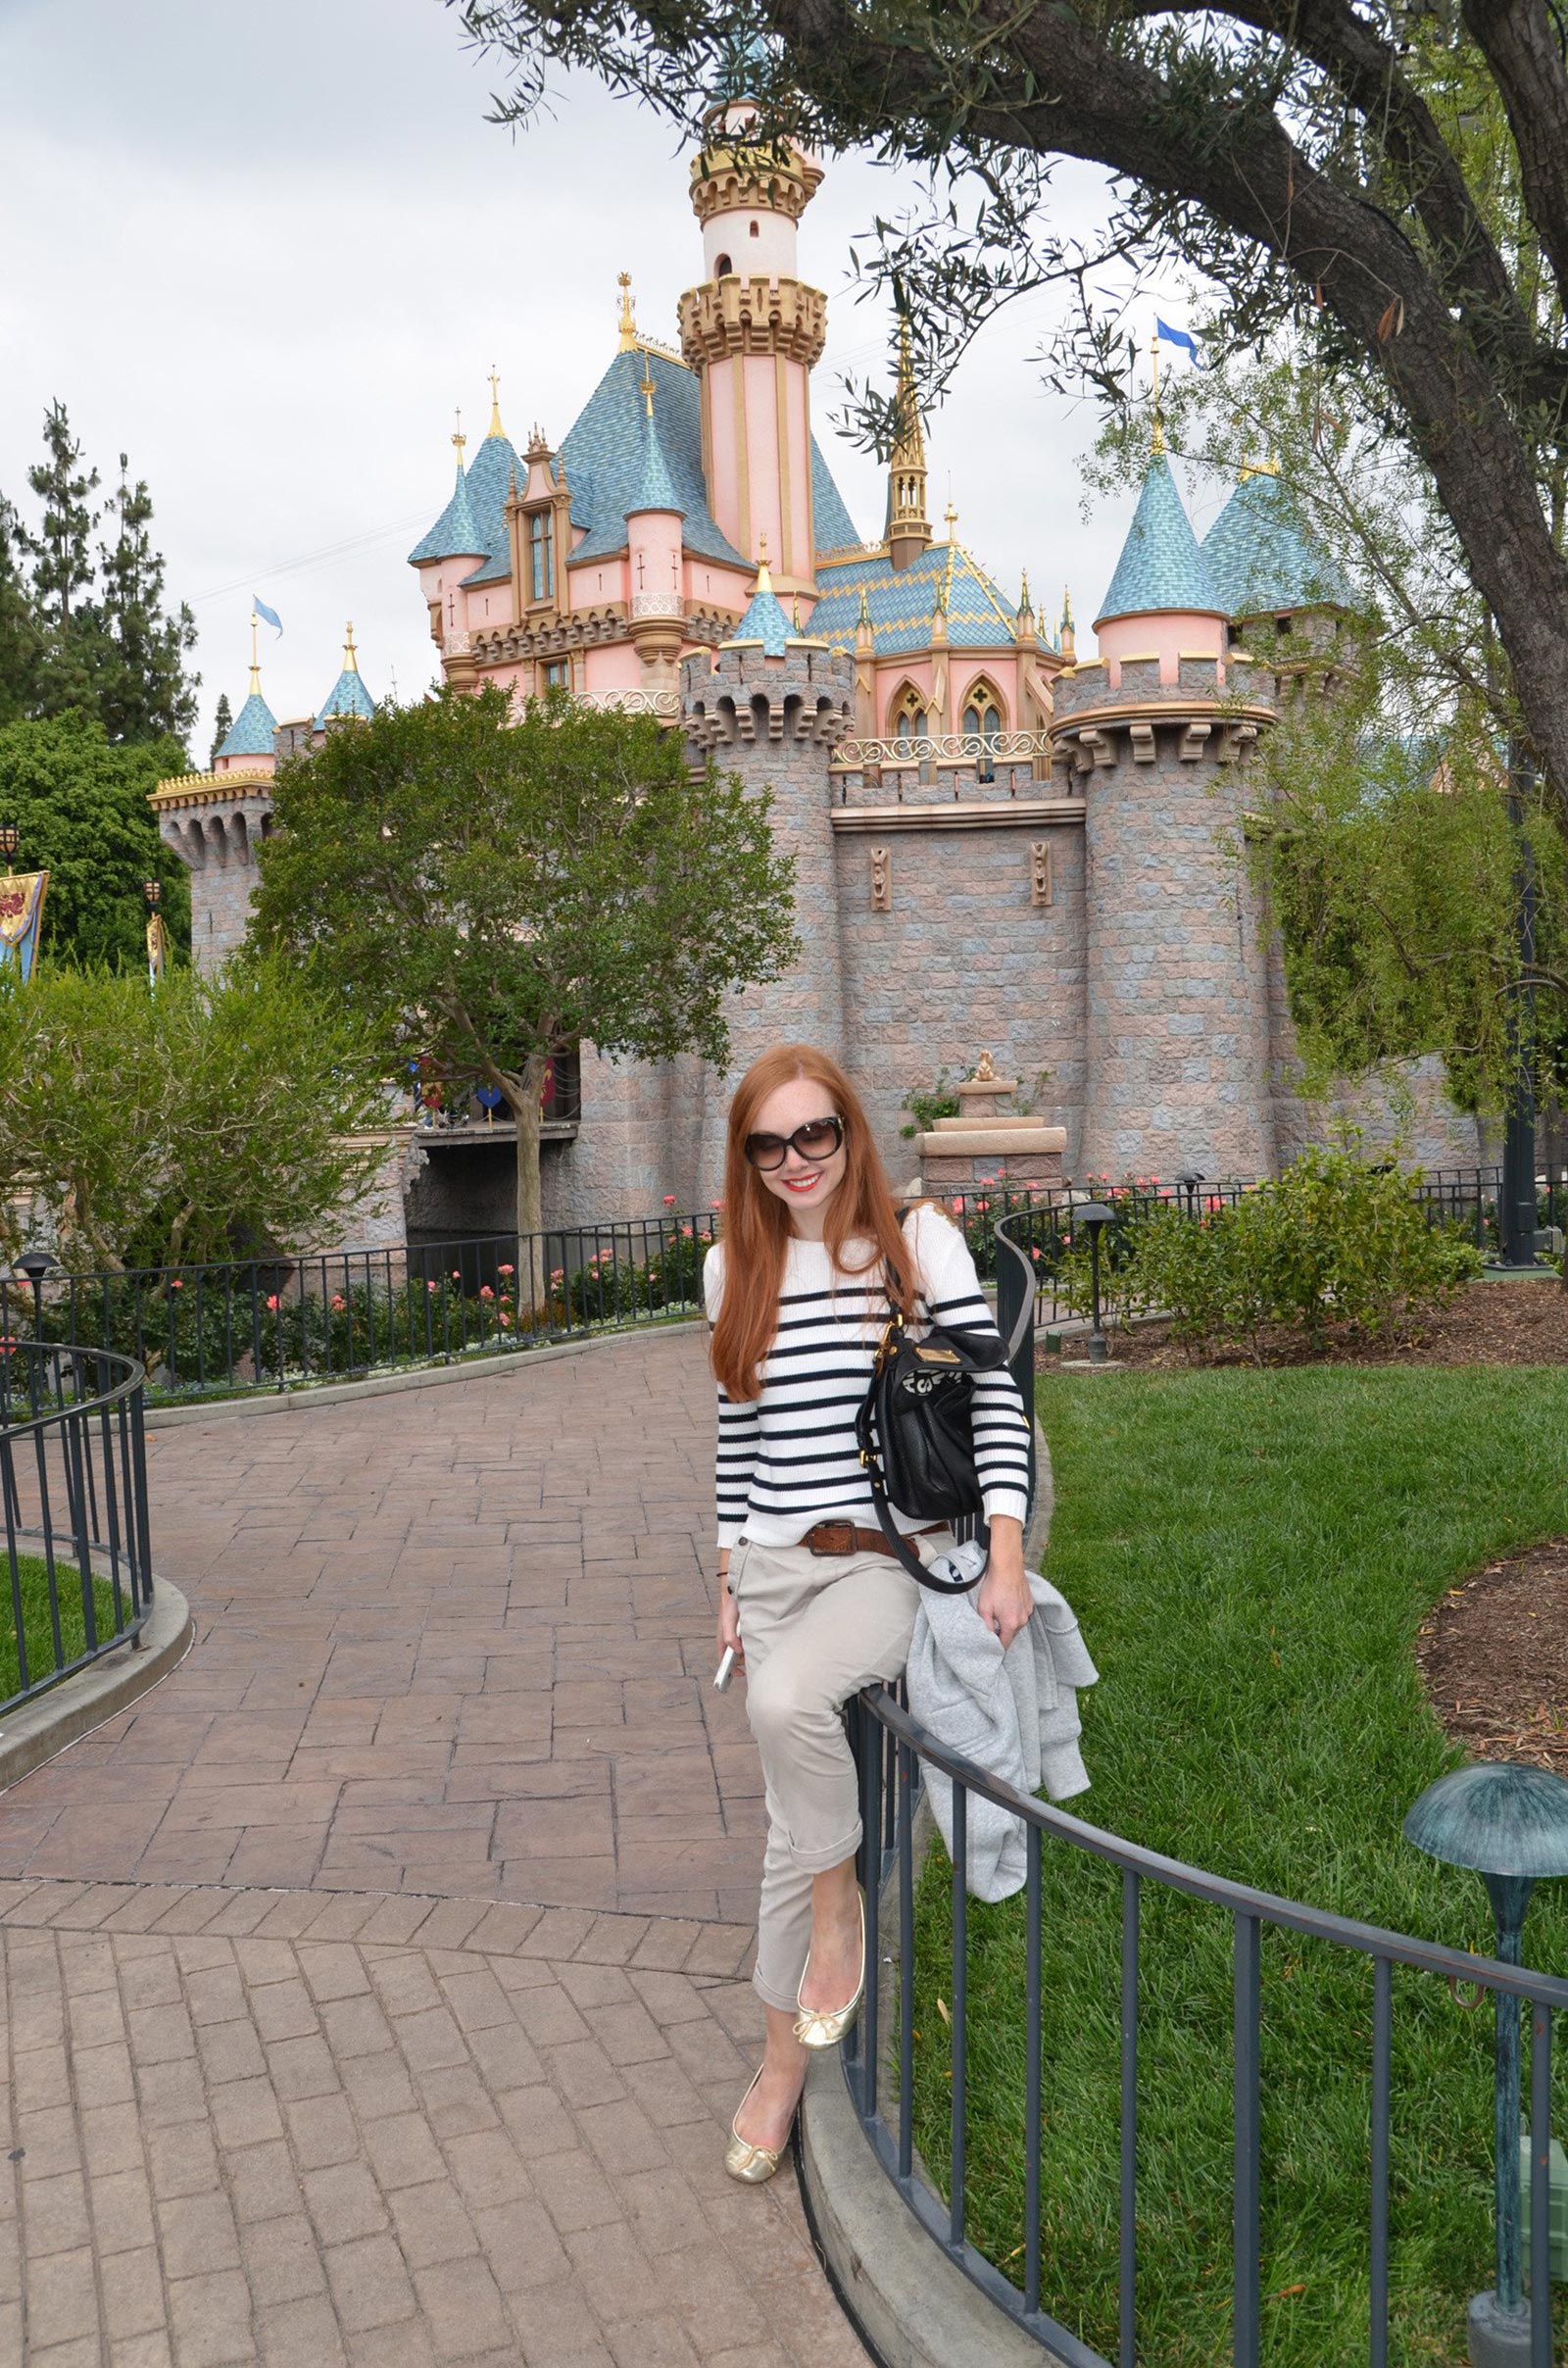 The Disney Castle at Disneyland, California